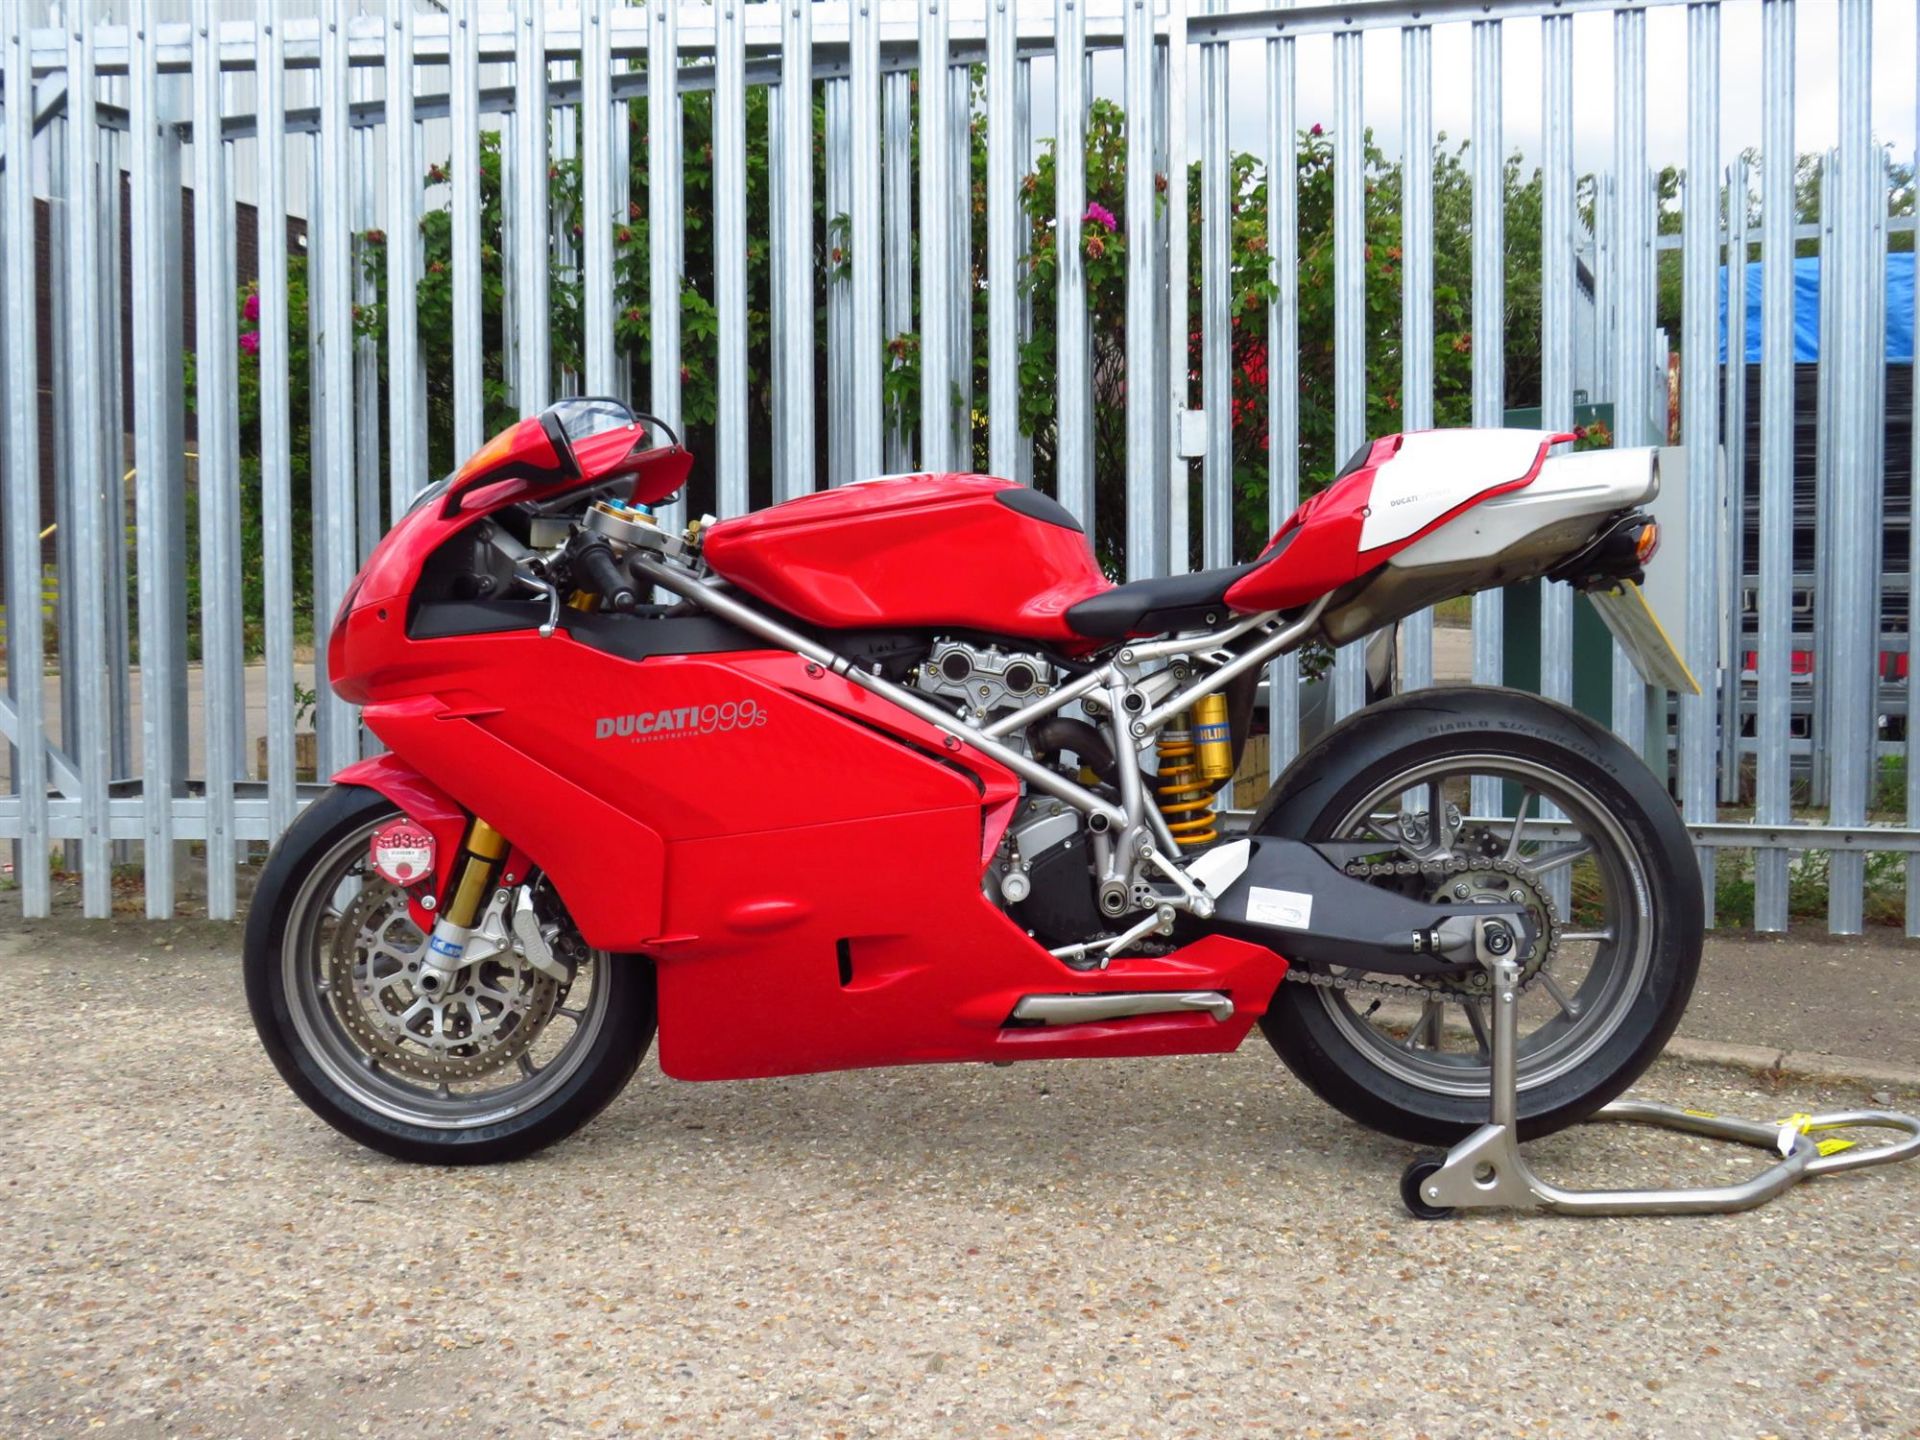 2003 Ducati 999S 998cc - Image 2 of 10